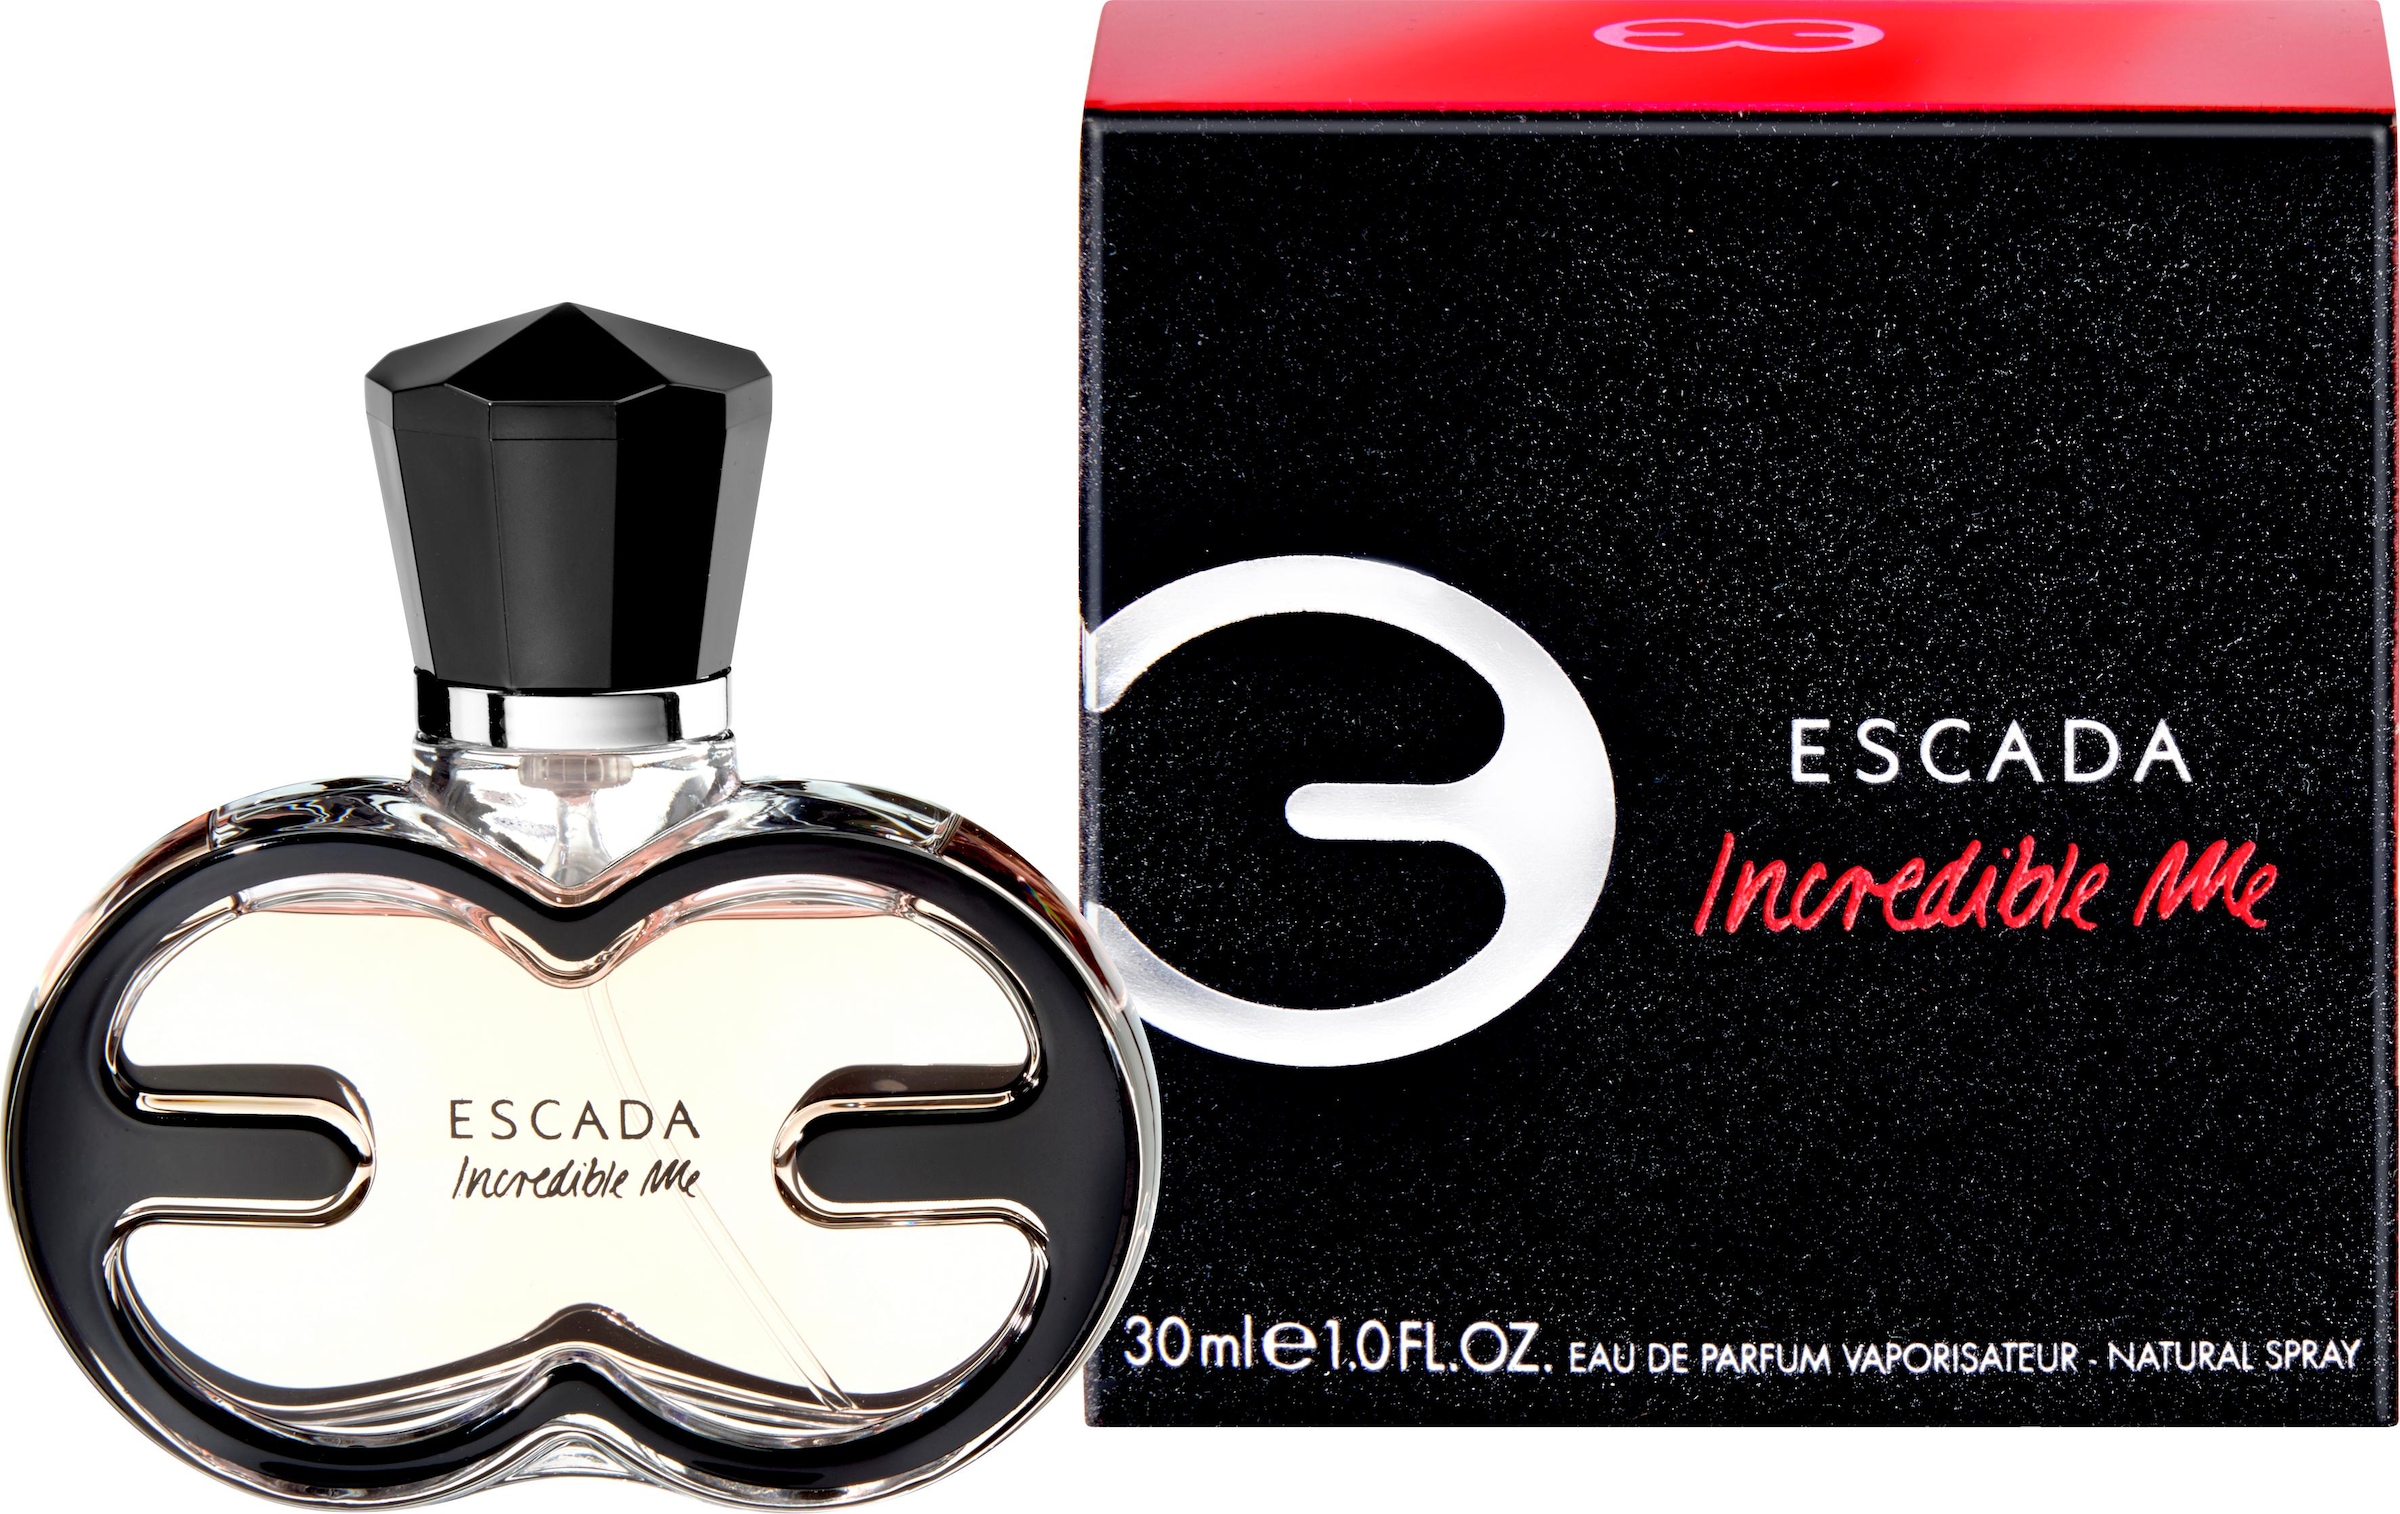 ESCADA Eau de Parfum bequem »Escada Incredible Me« bestellen